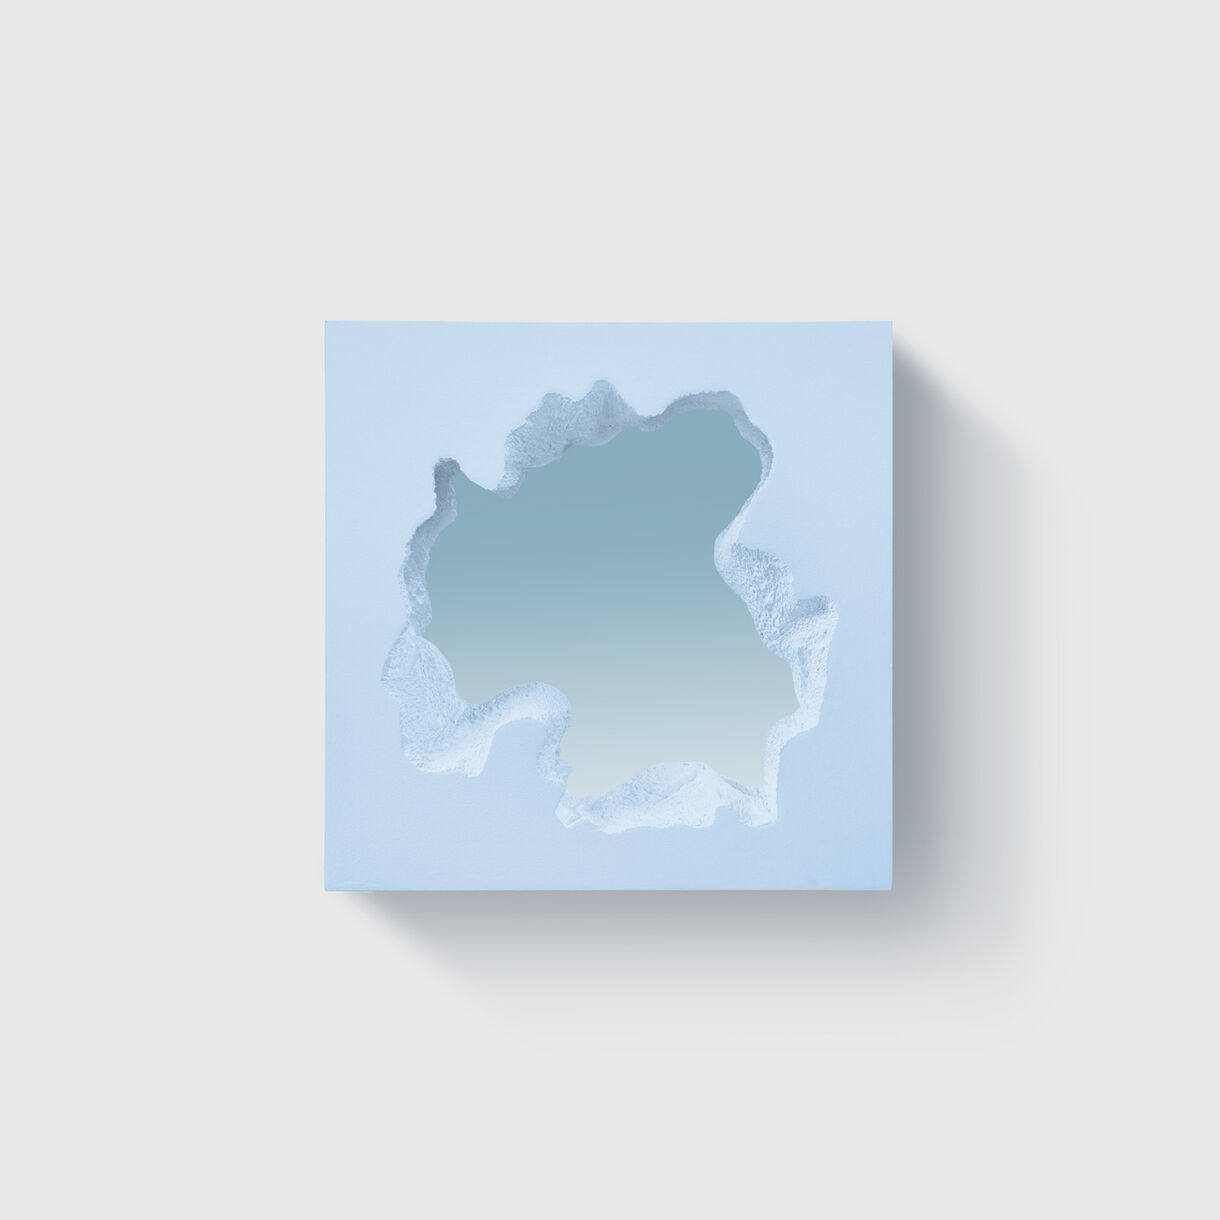 Broken Square Mirror, Blue Edition